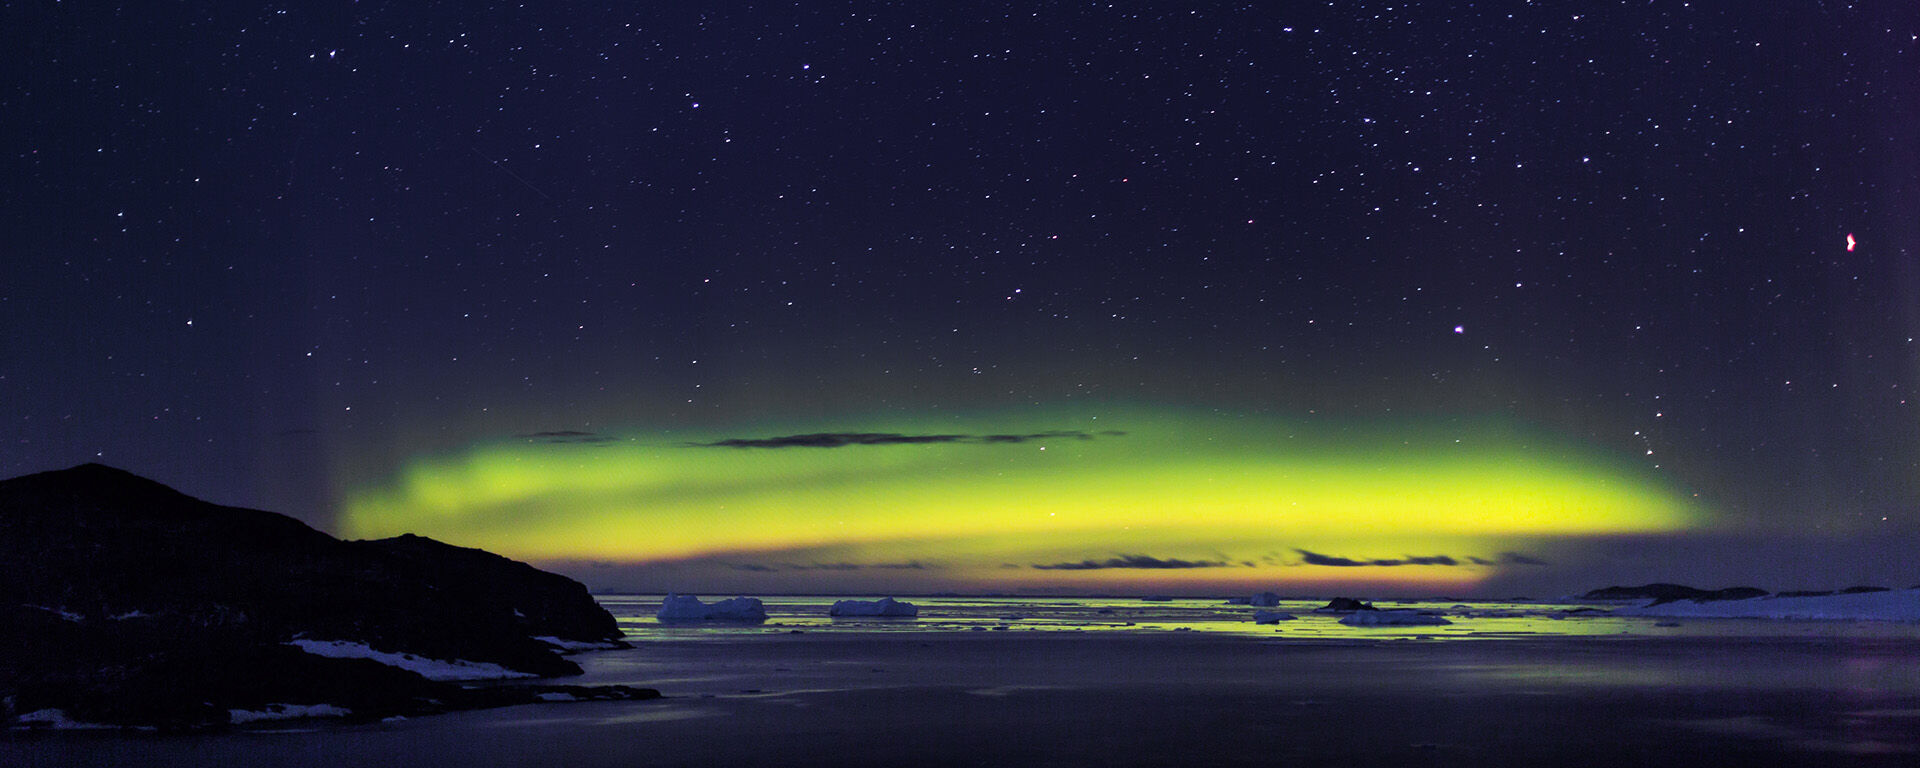 Aurora Australis green lights over the coastline